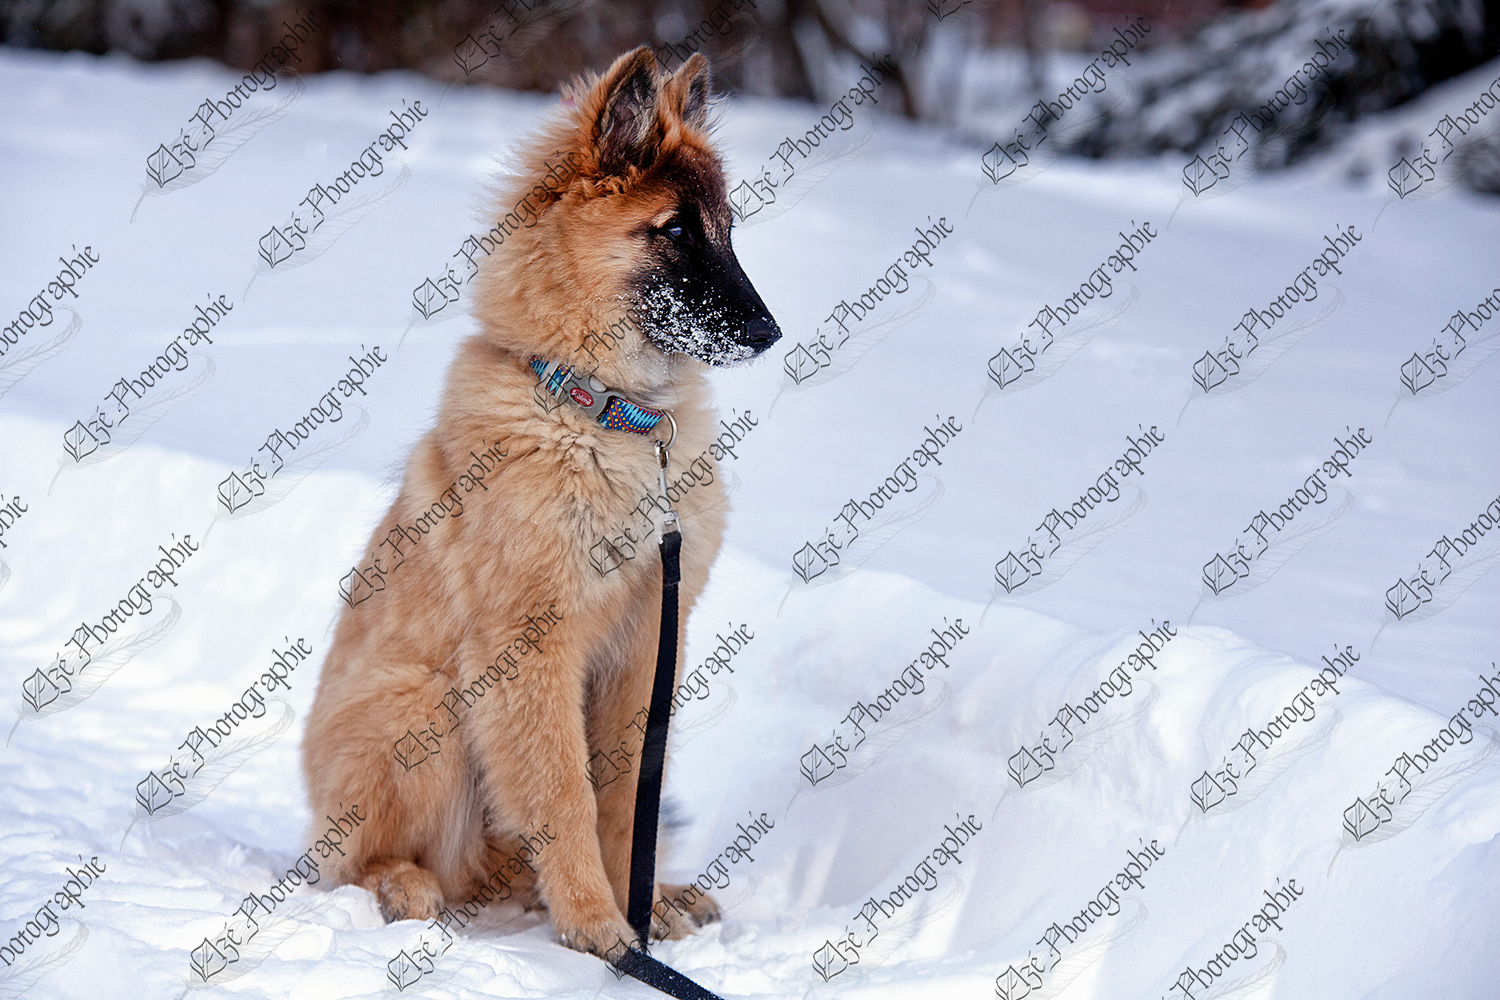 elze_photo_5908_chiot_promenade_chien_dog_winter